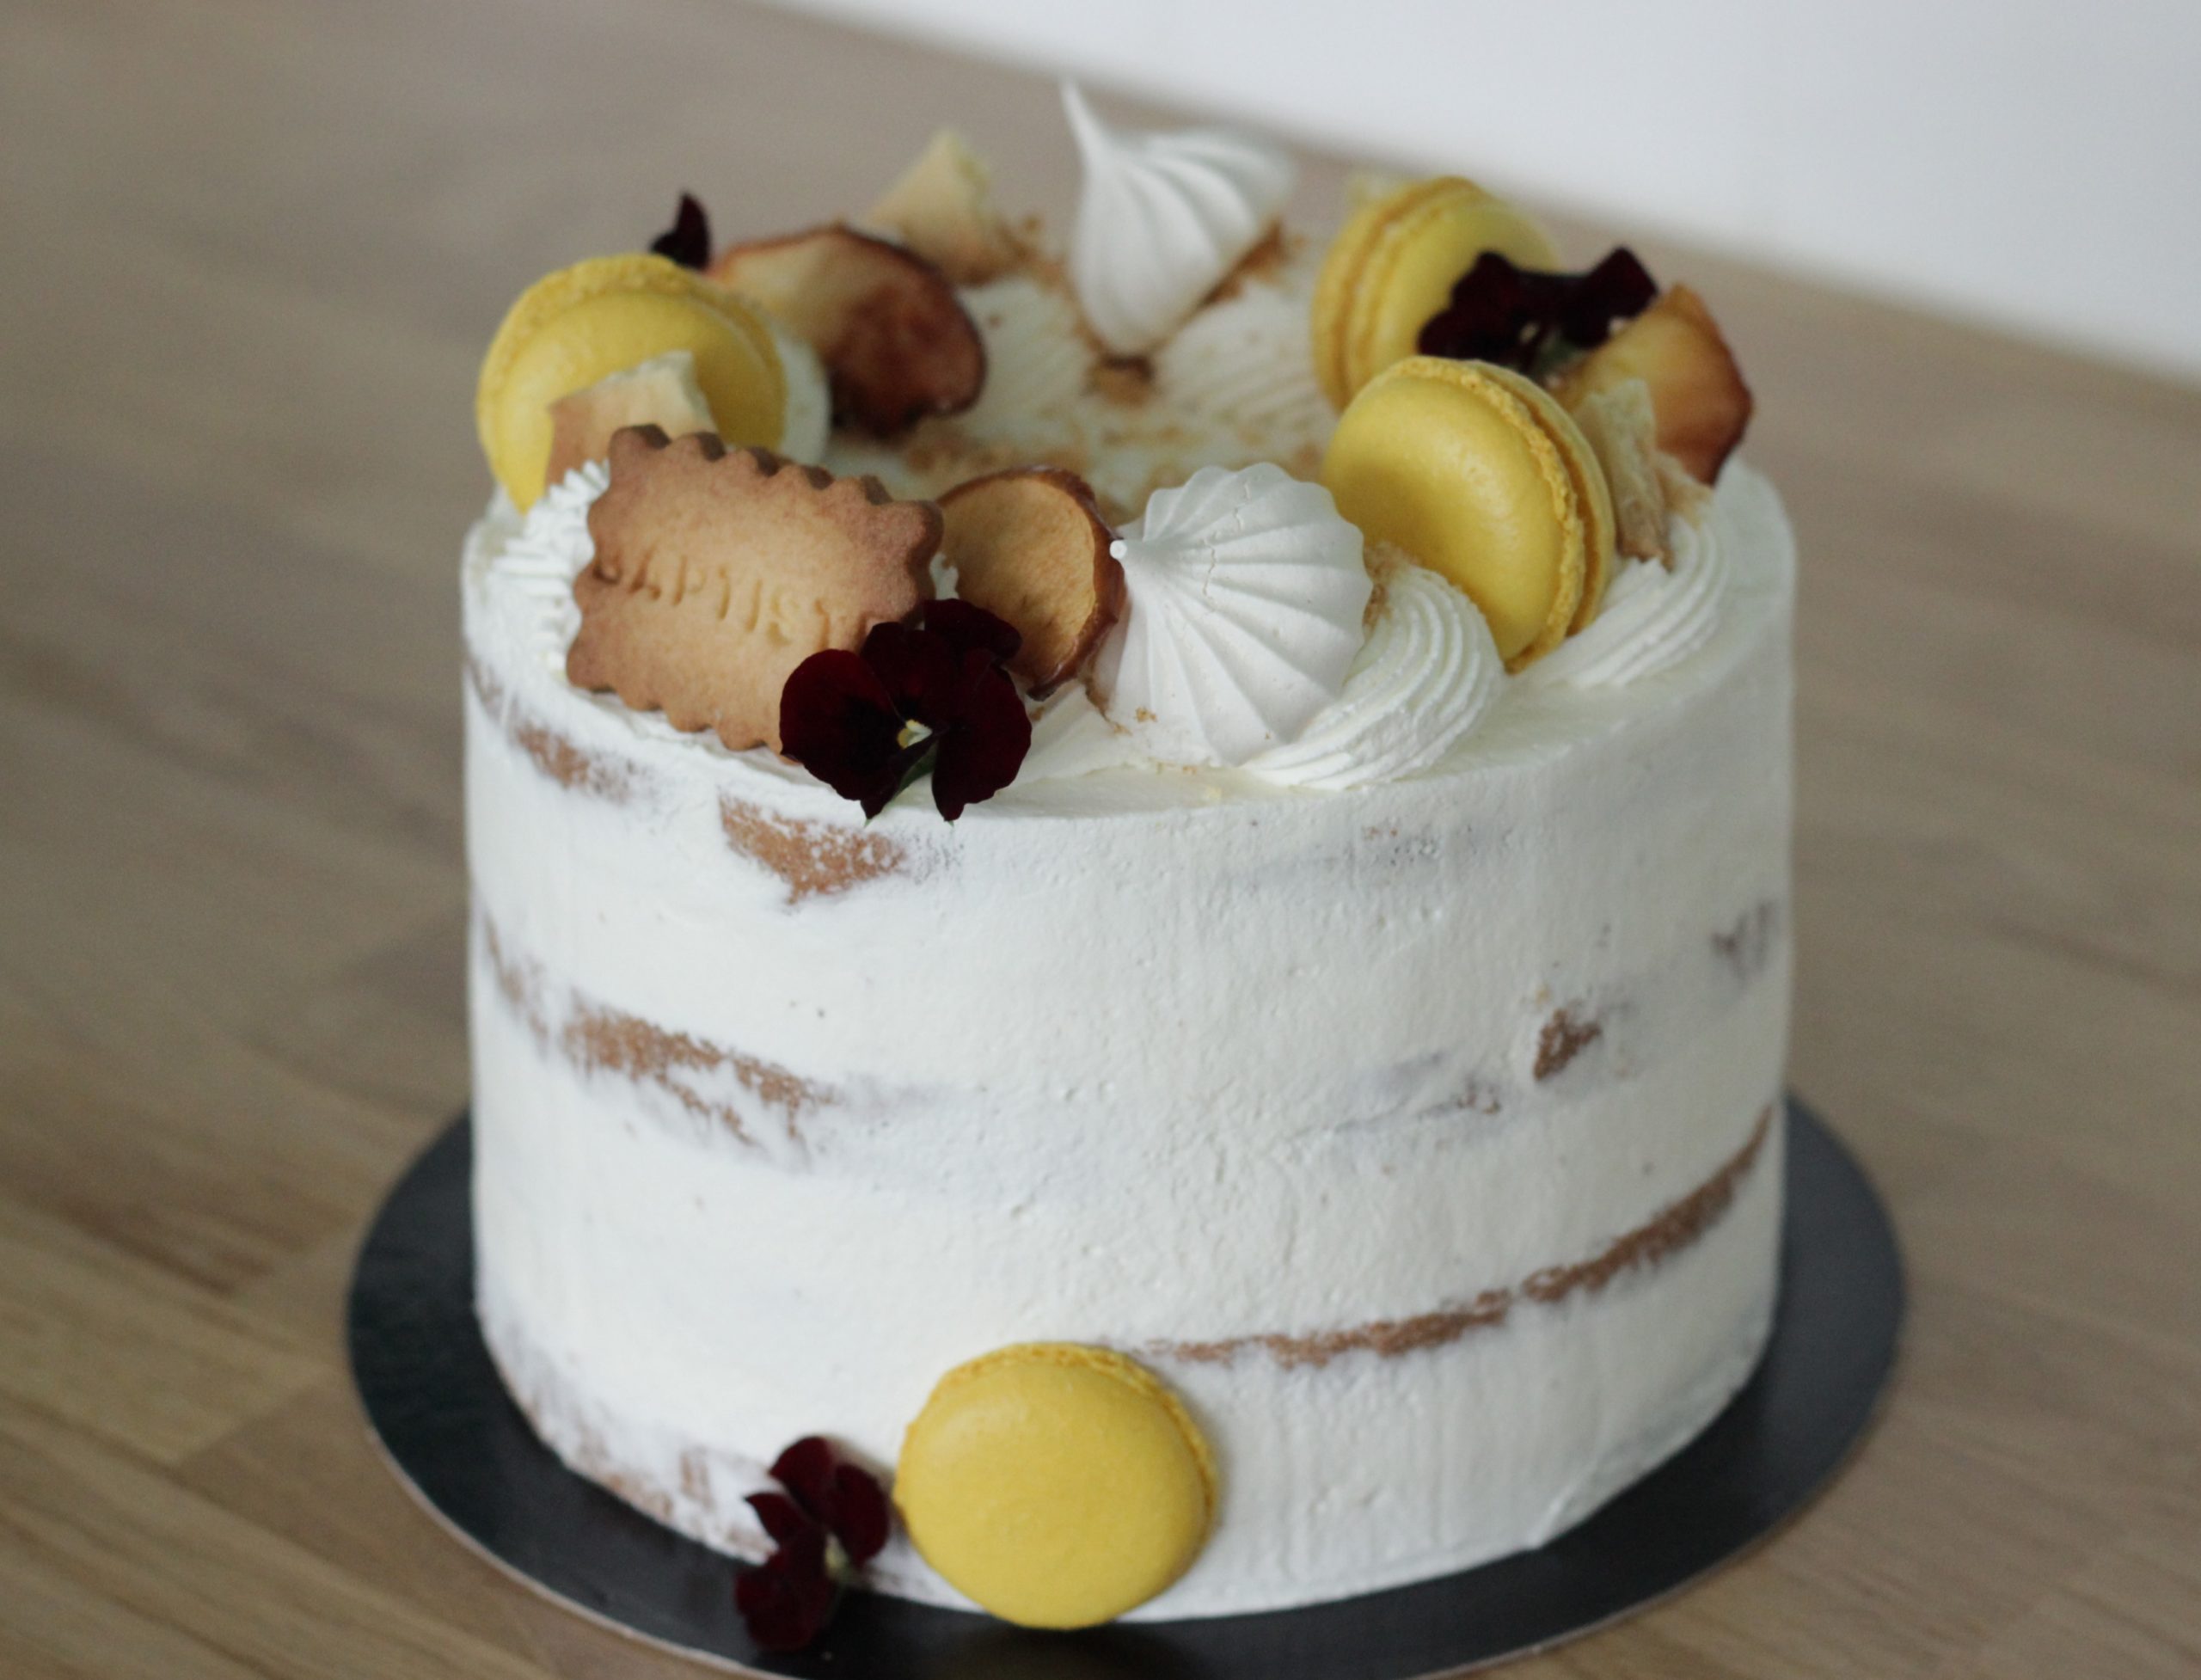 Naked cake + macarons